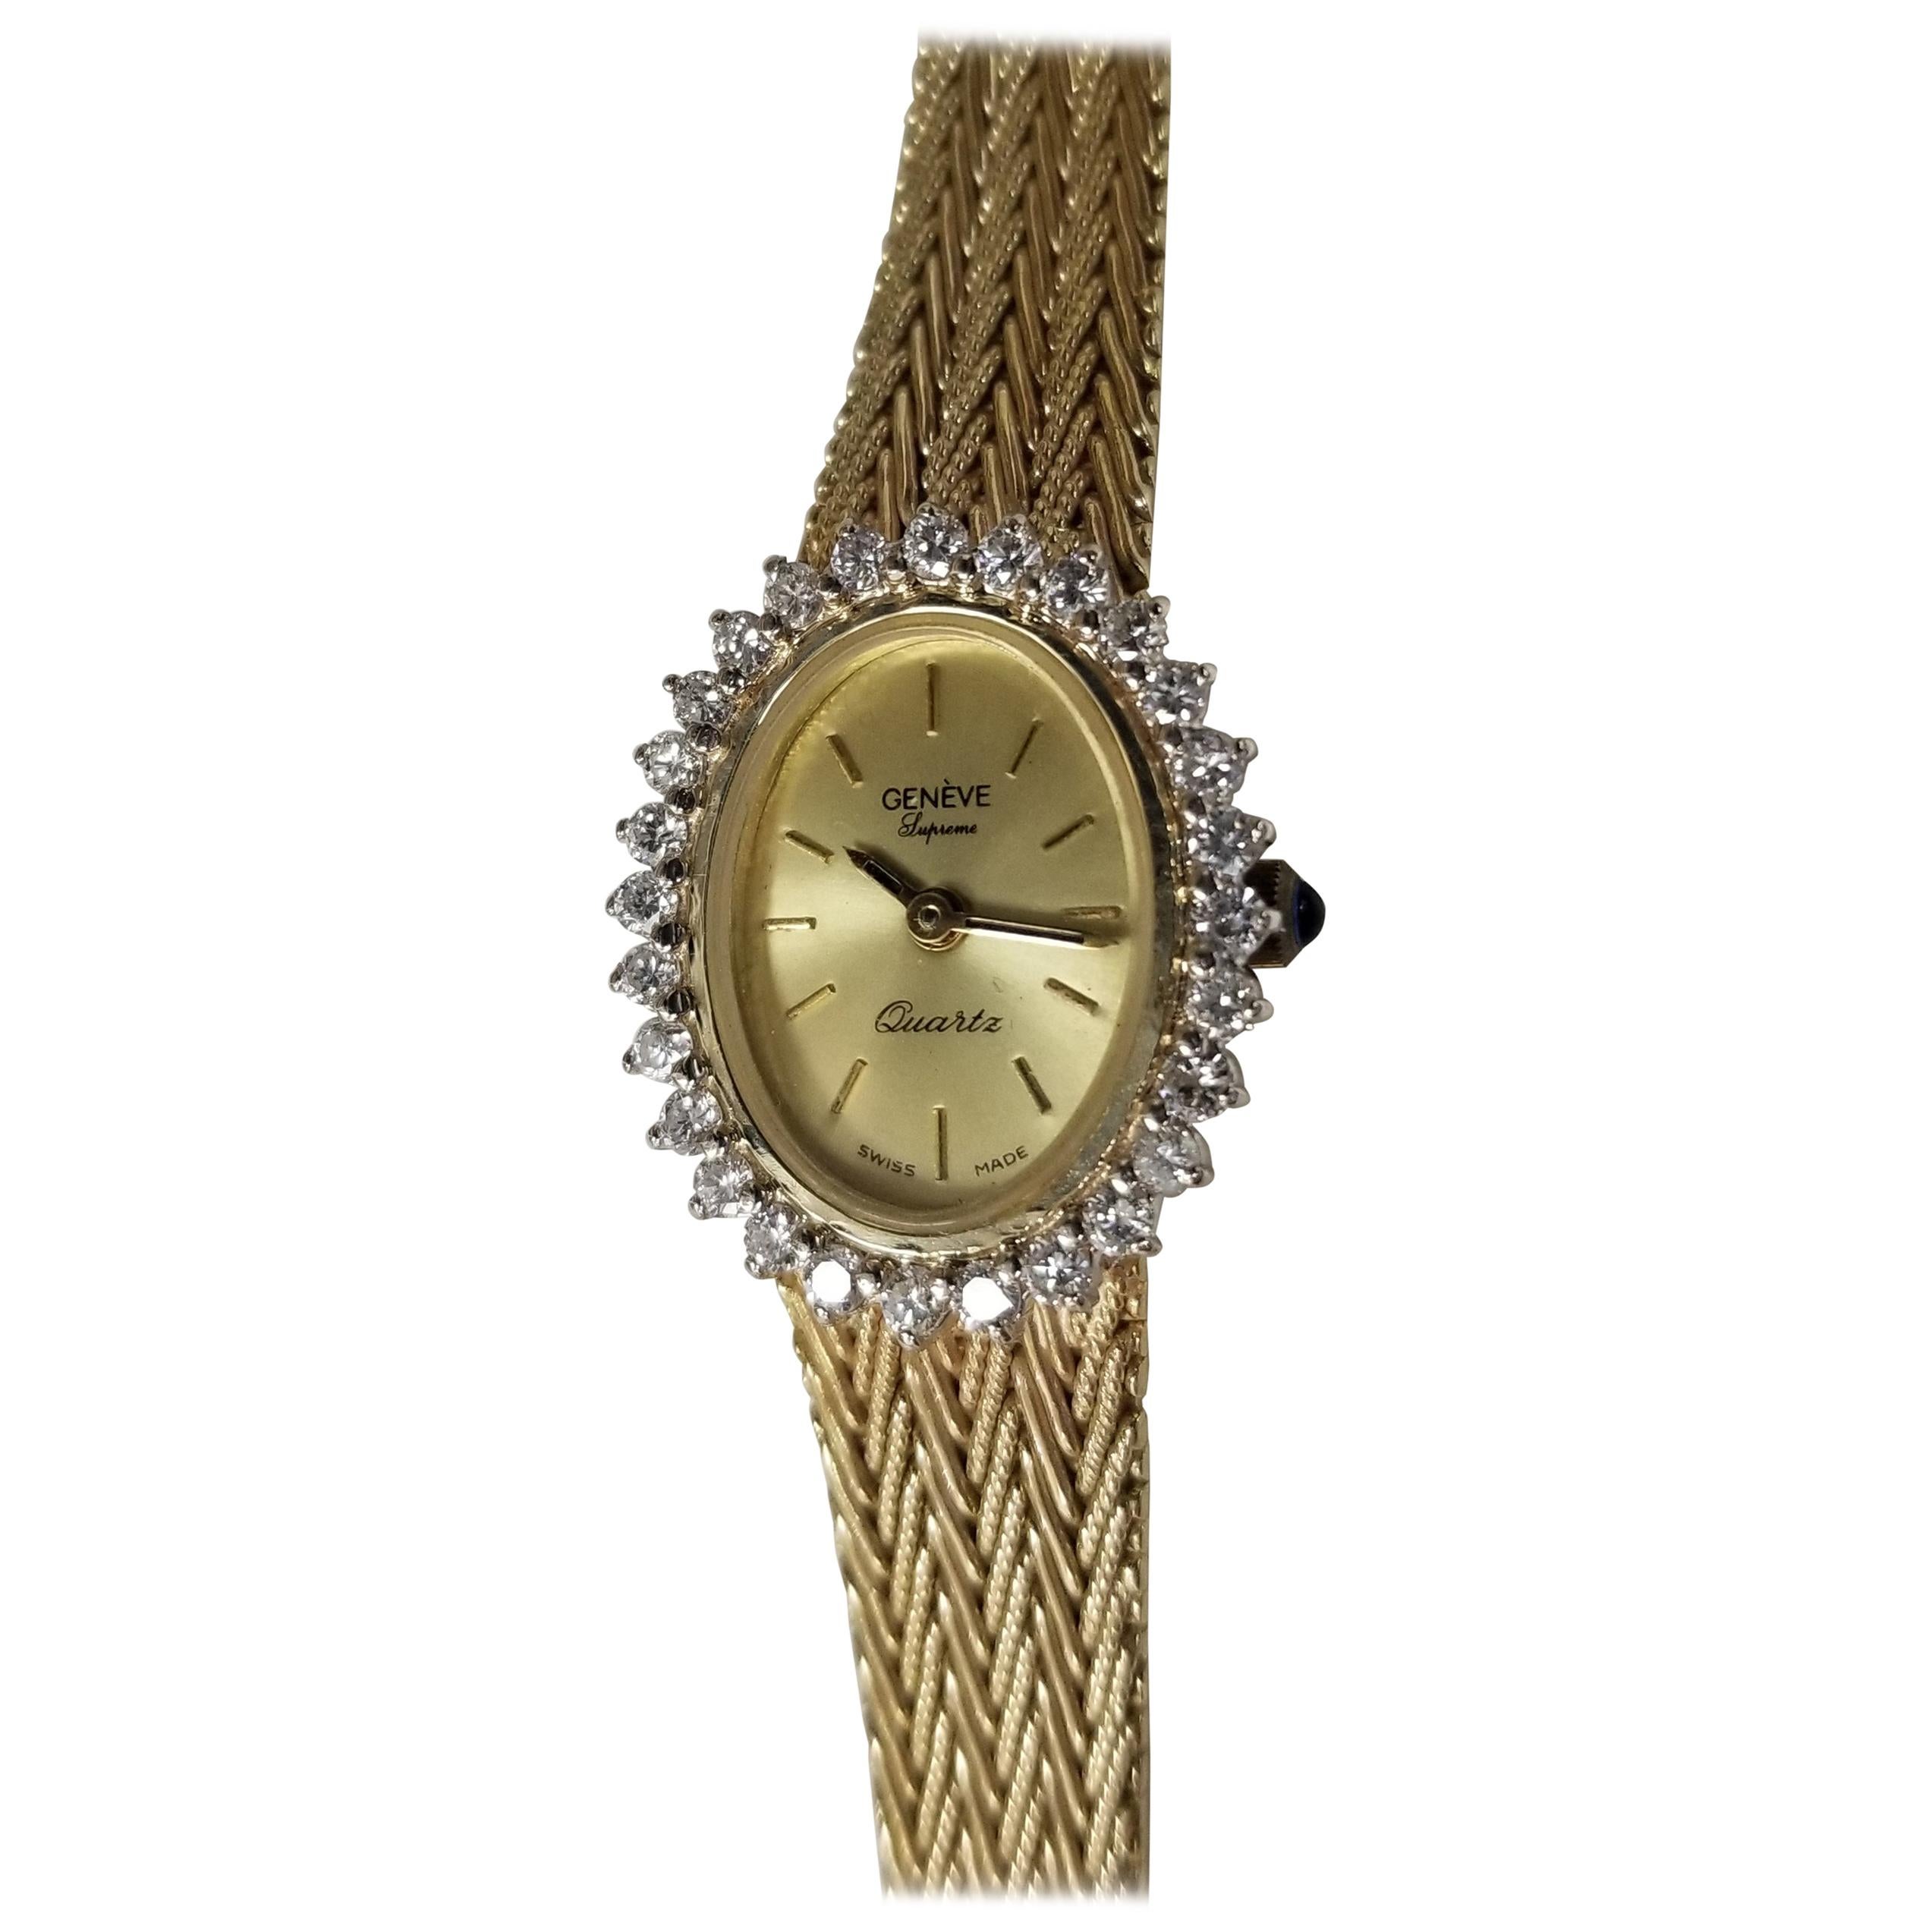 Geneve 14 Karat Yellow Gold Swiss Diamond Watch with Mesh Band